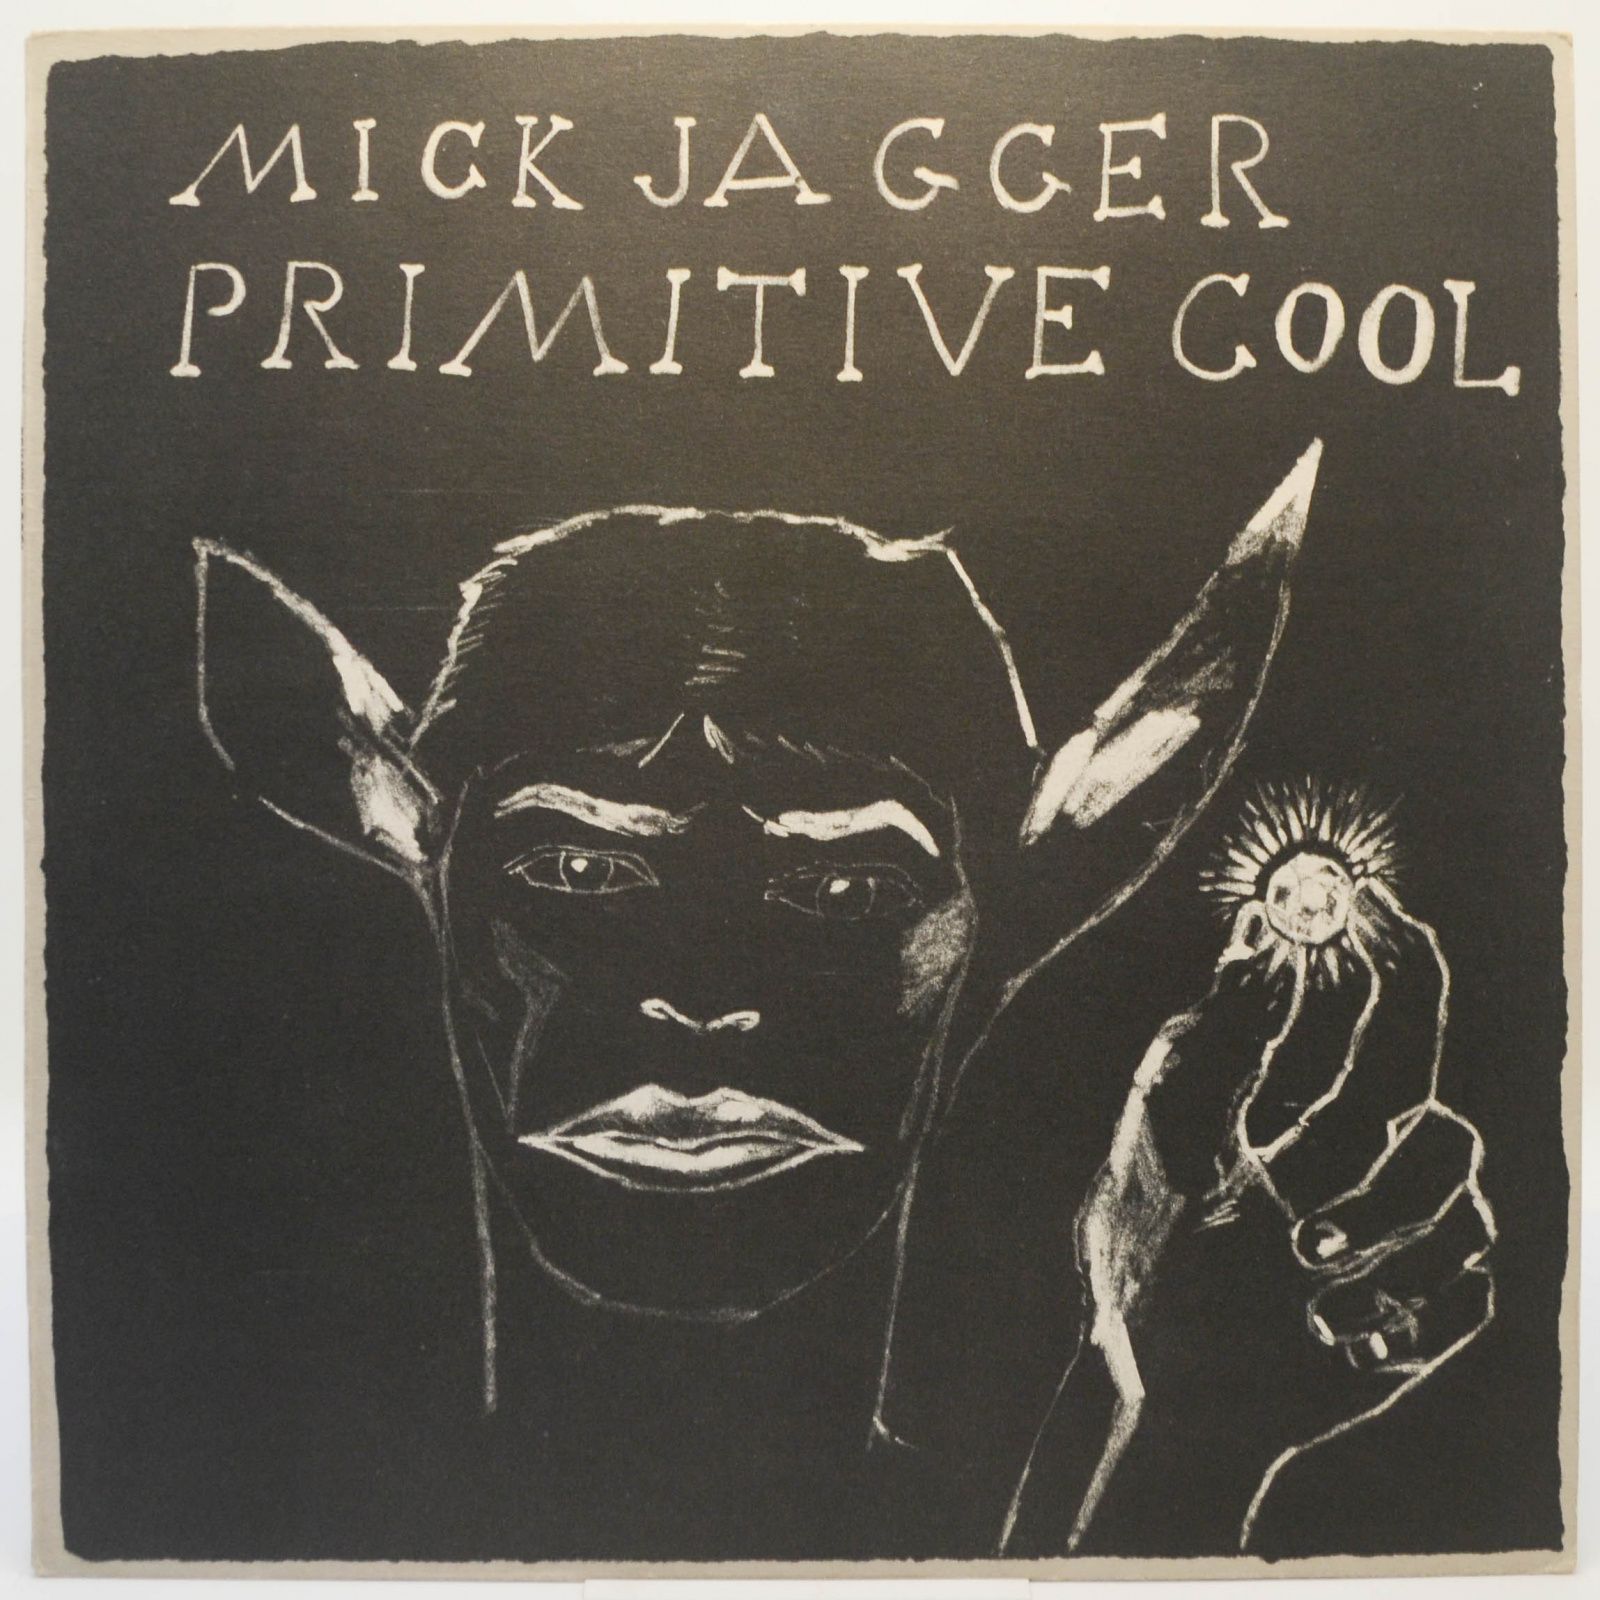 Mick Jagger — Primitive Cool, 1987